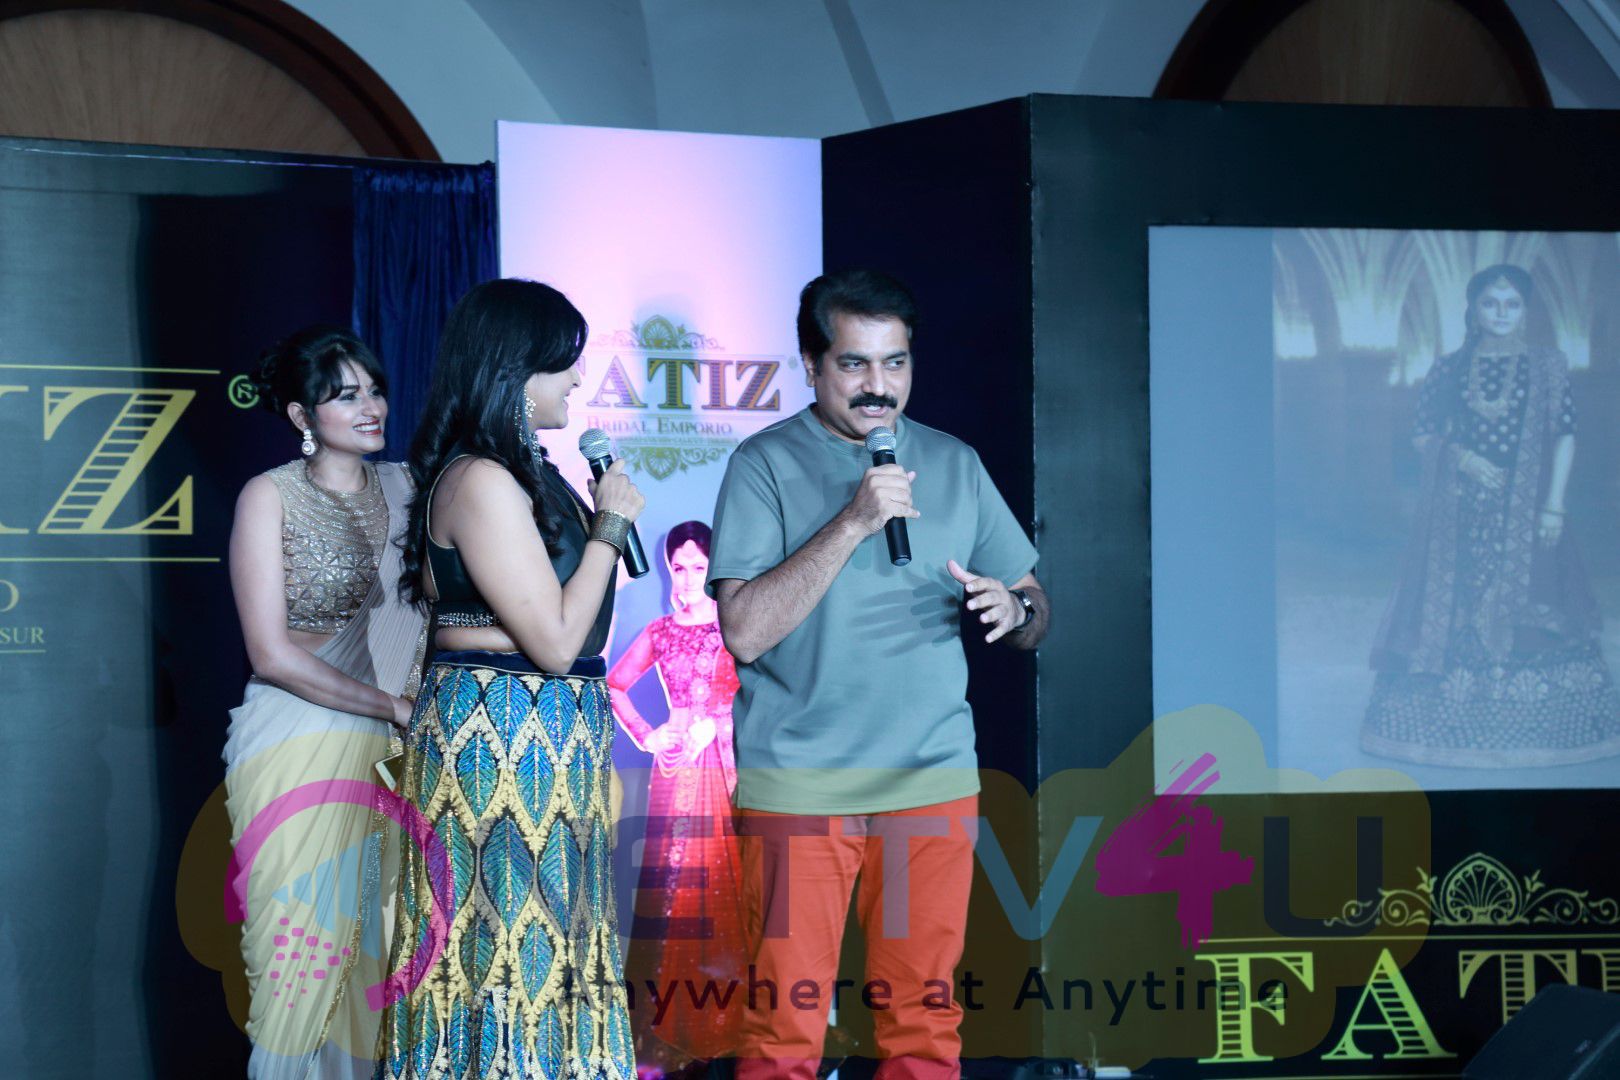 Remya Nambeesan's Fatiz Bridal Emporio Launch And Fashion Show Luminous Photos Tamil Gallery